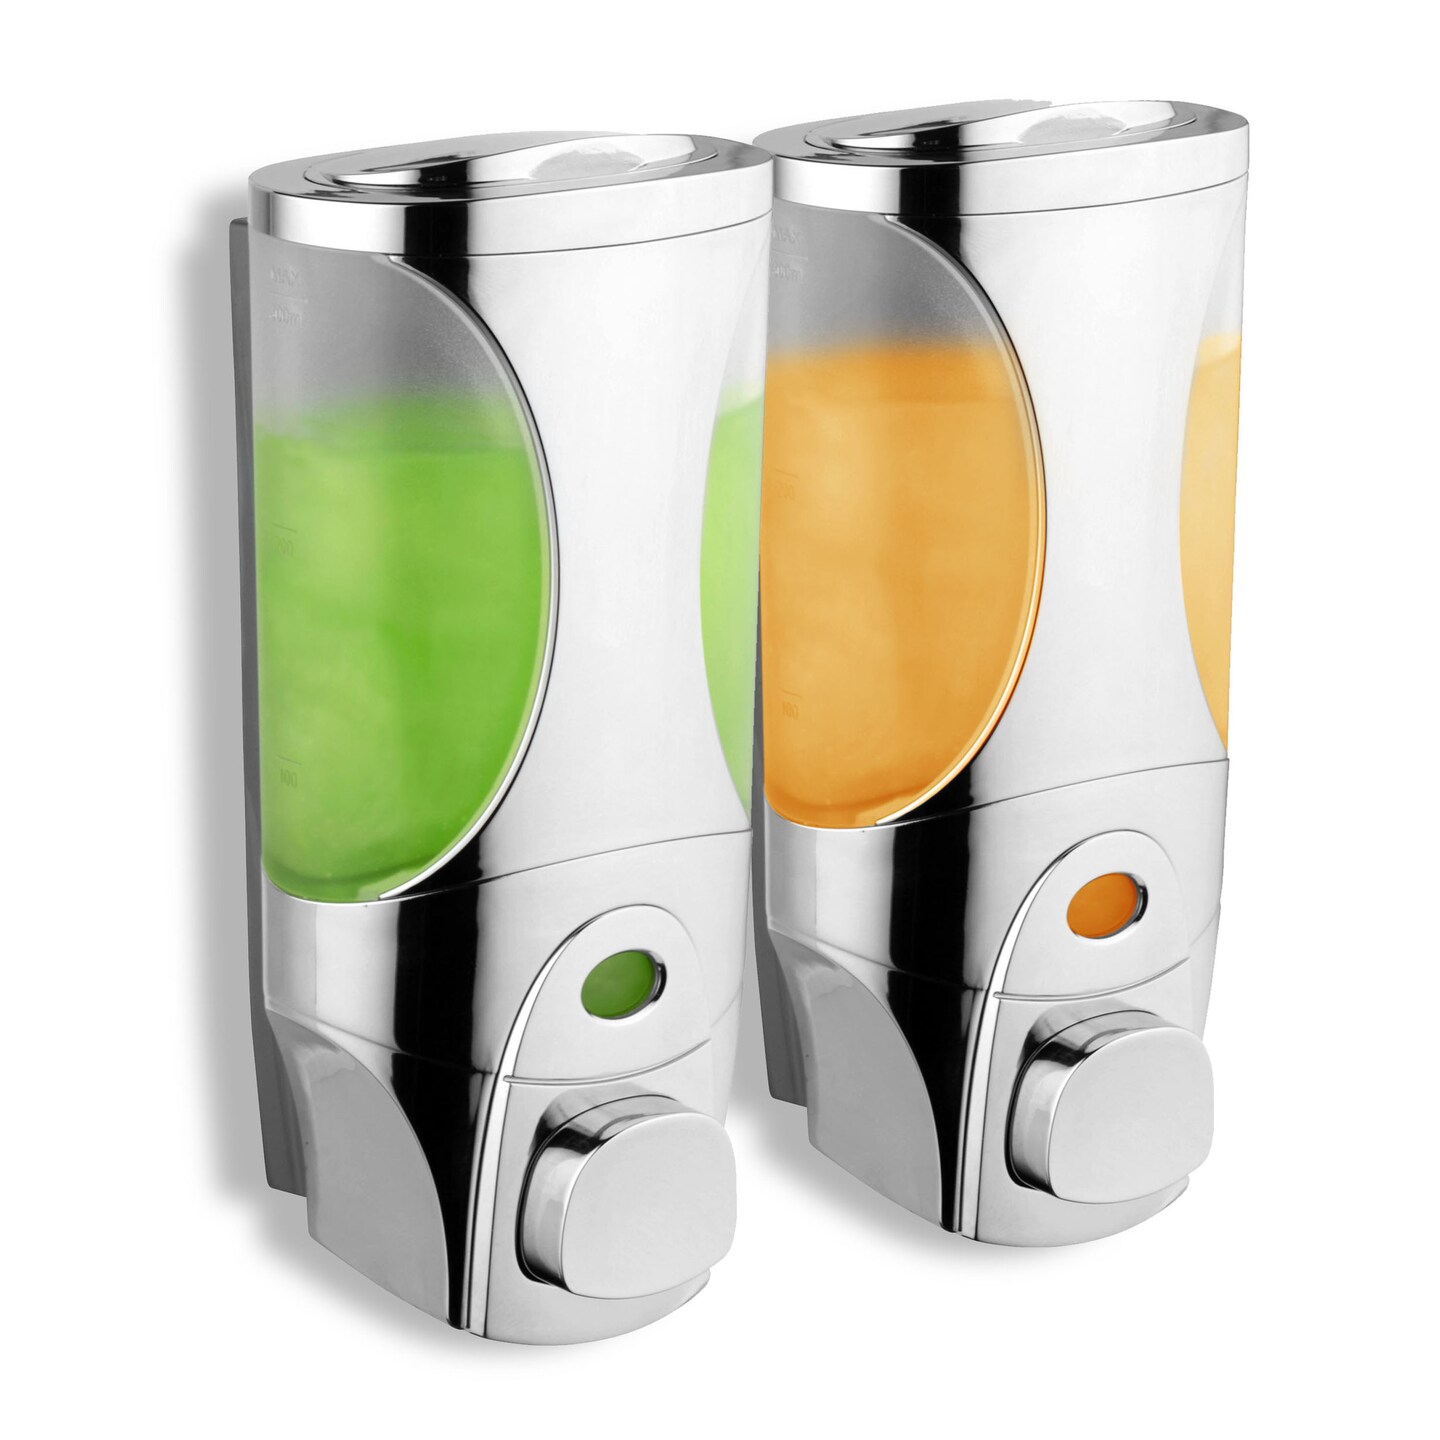 HotelSpa   Curves Luxury Soap/Shampoo/Lotion Modular-design Shower Dispenser System (Pack of 2)